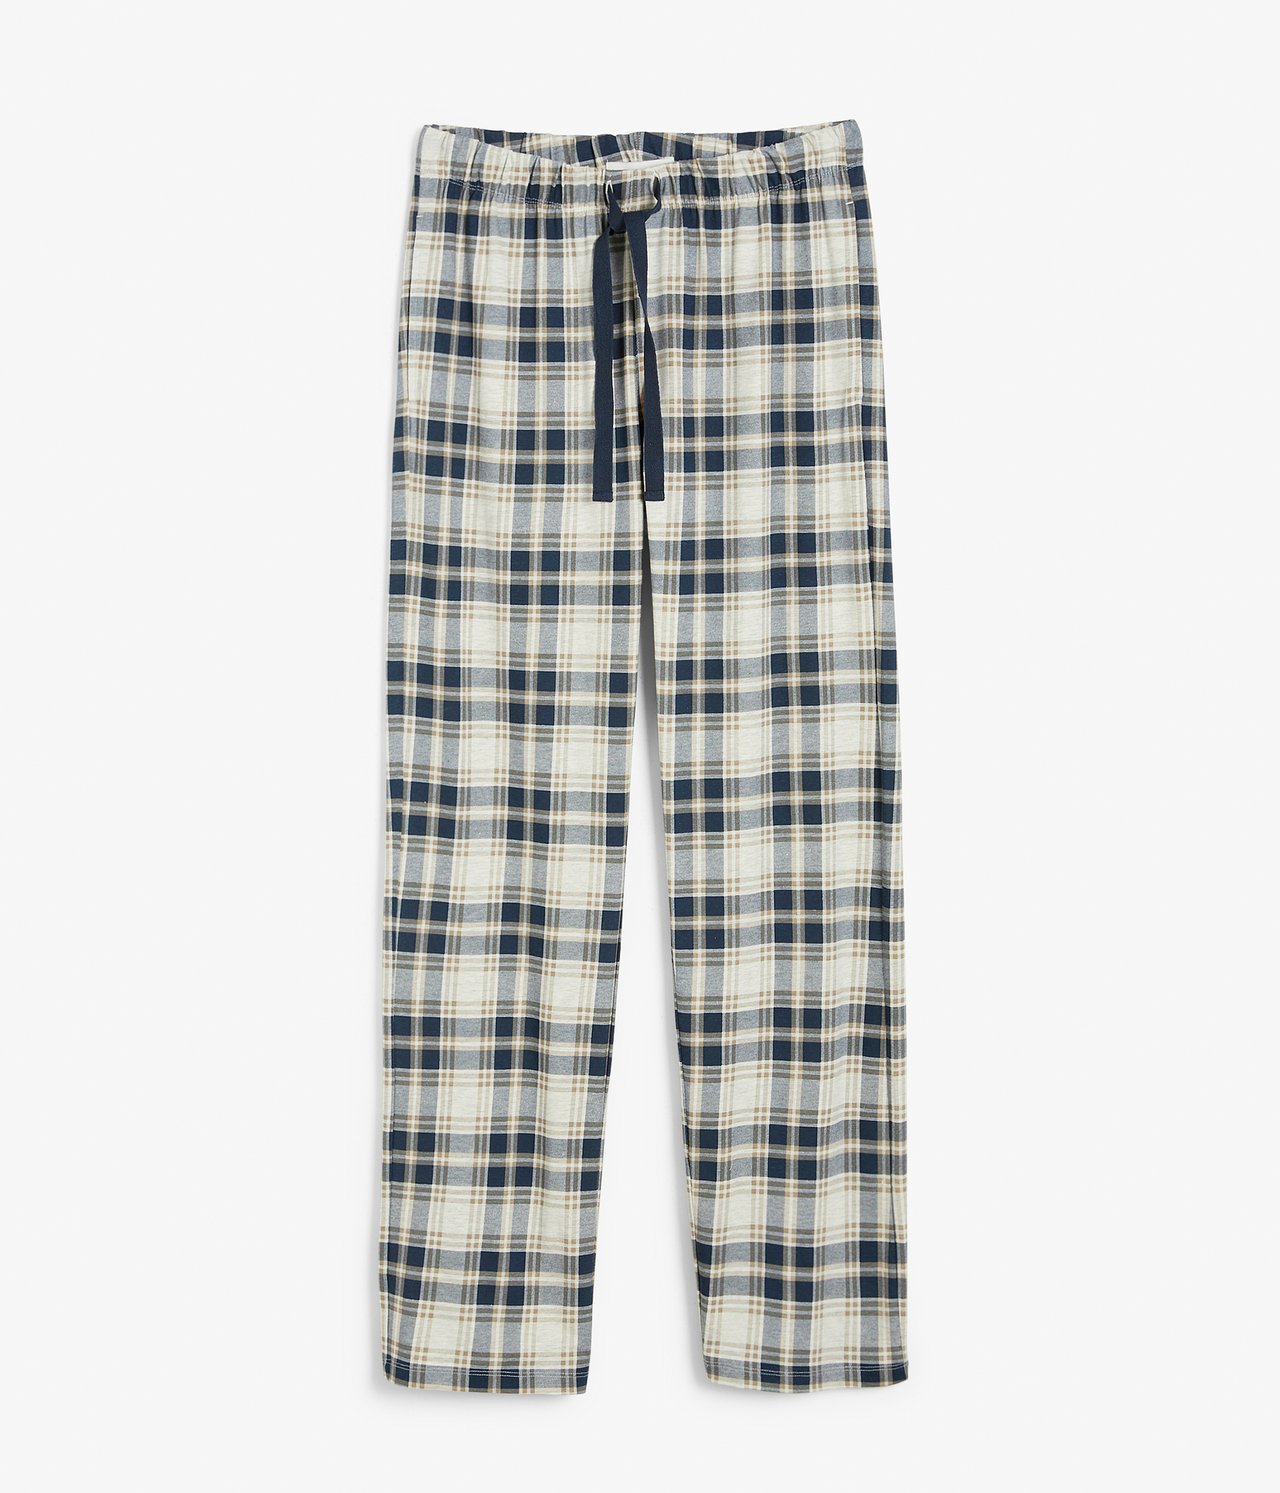 Pyjamasbukse - Mørkeblå - 6